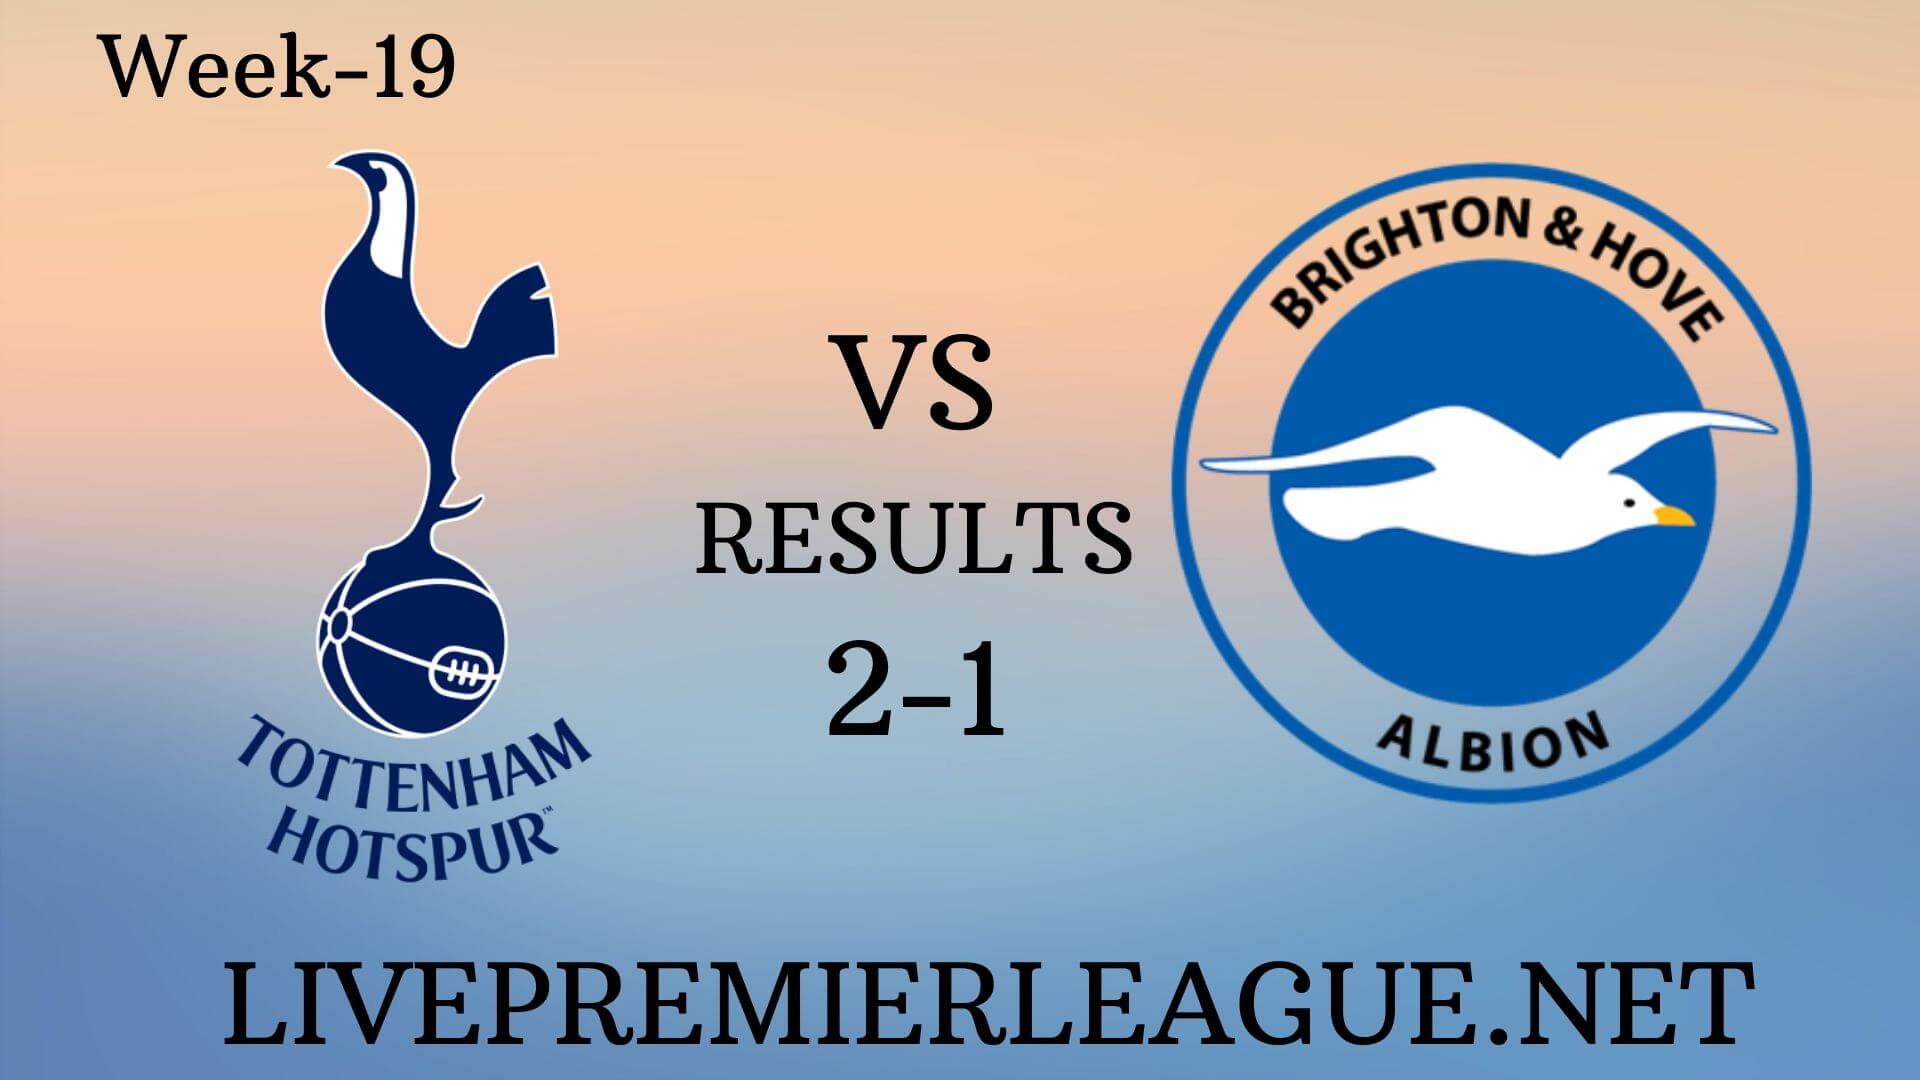 Tottenham Hotspur Vs Brighton and Hove Albion | Week 19 Result 2019